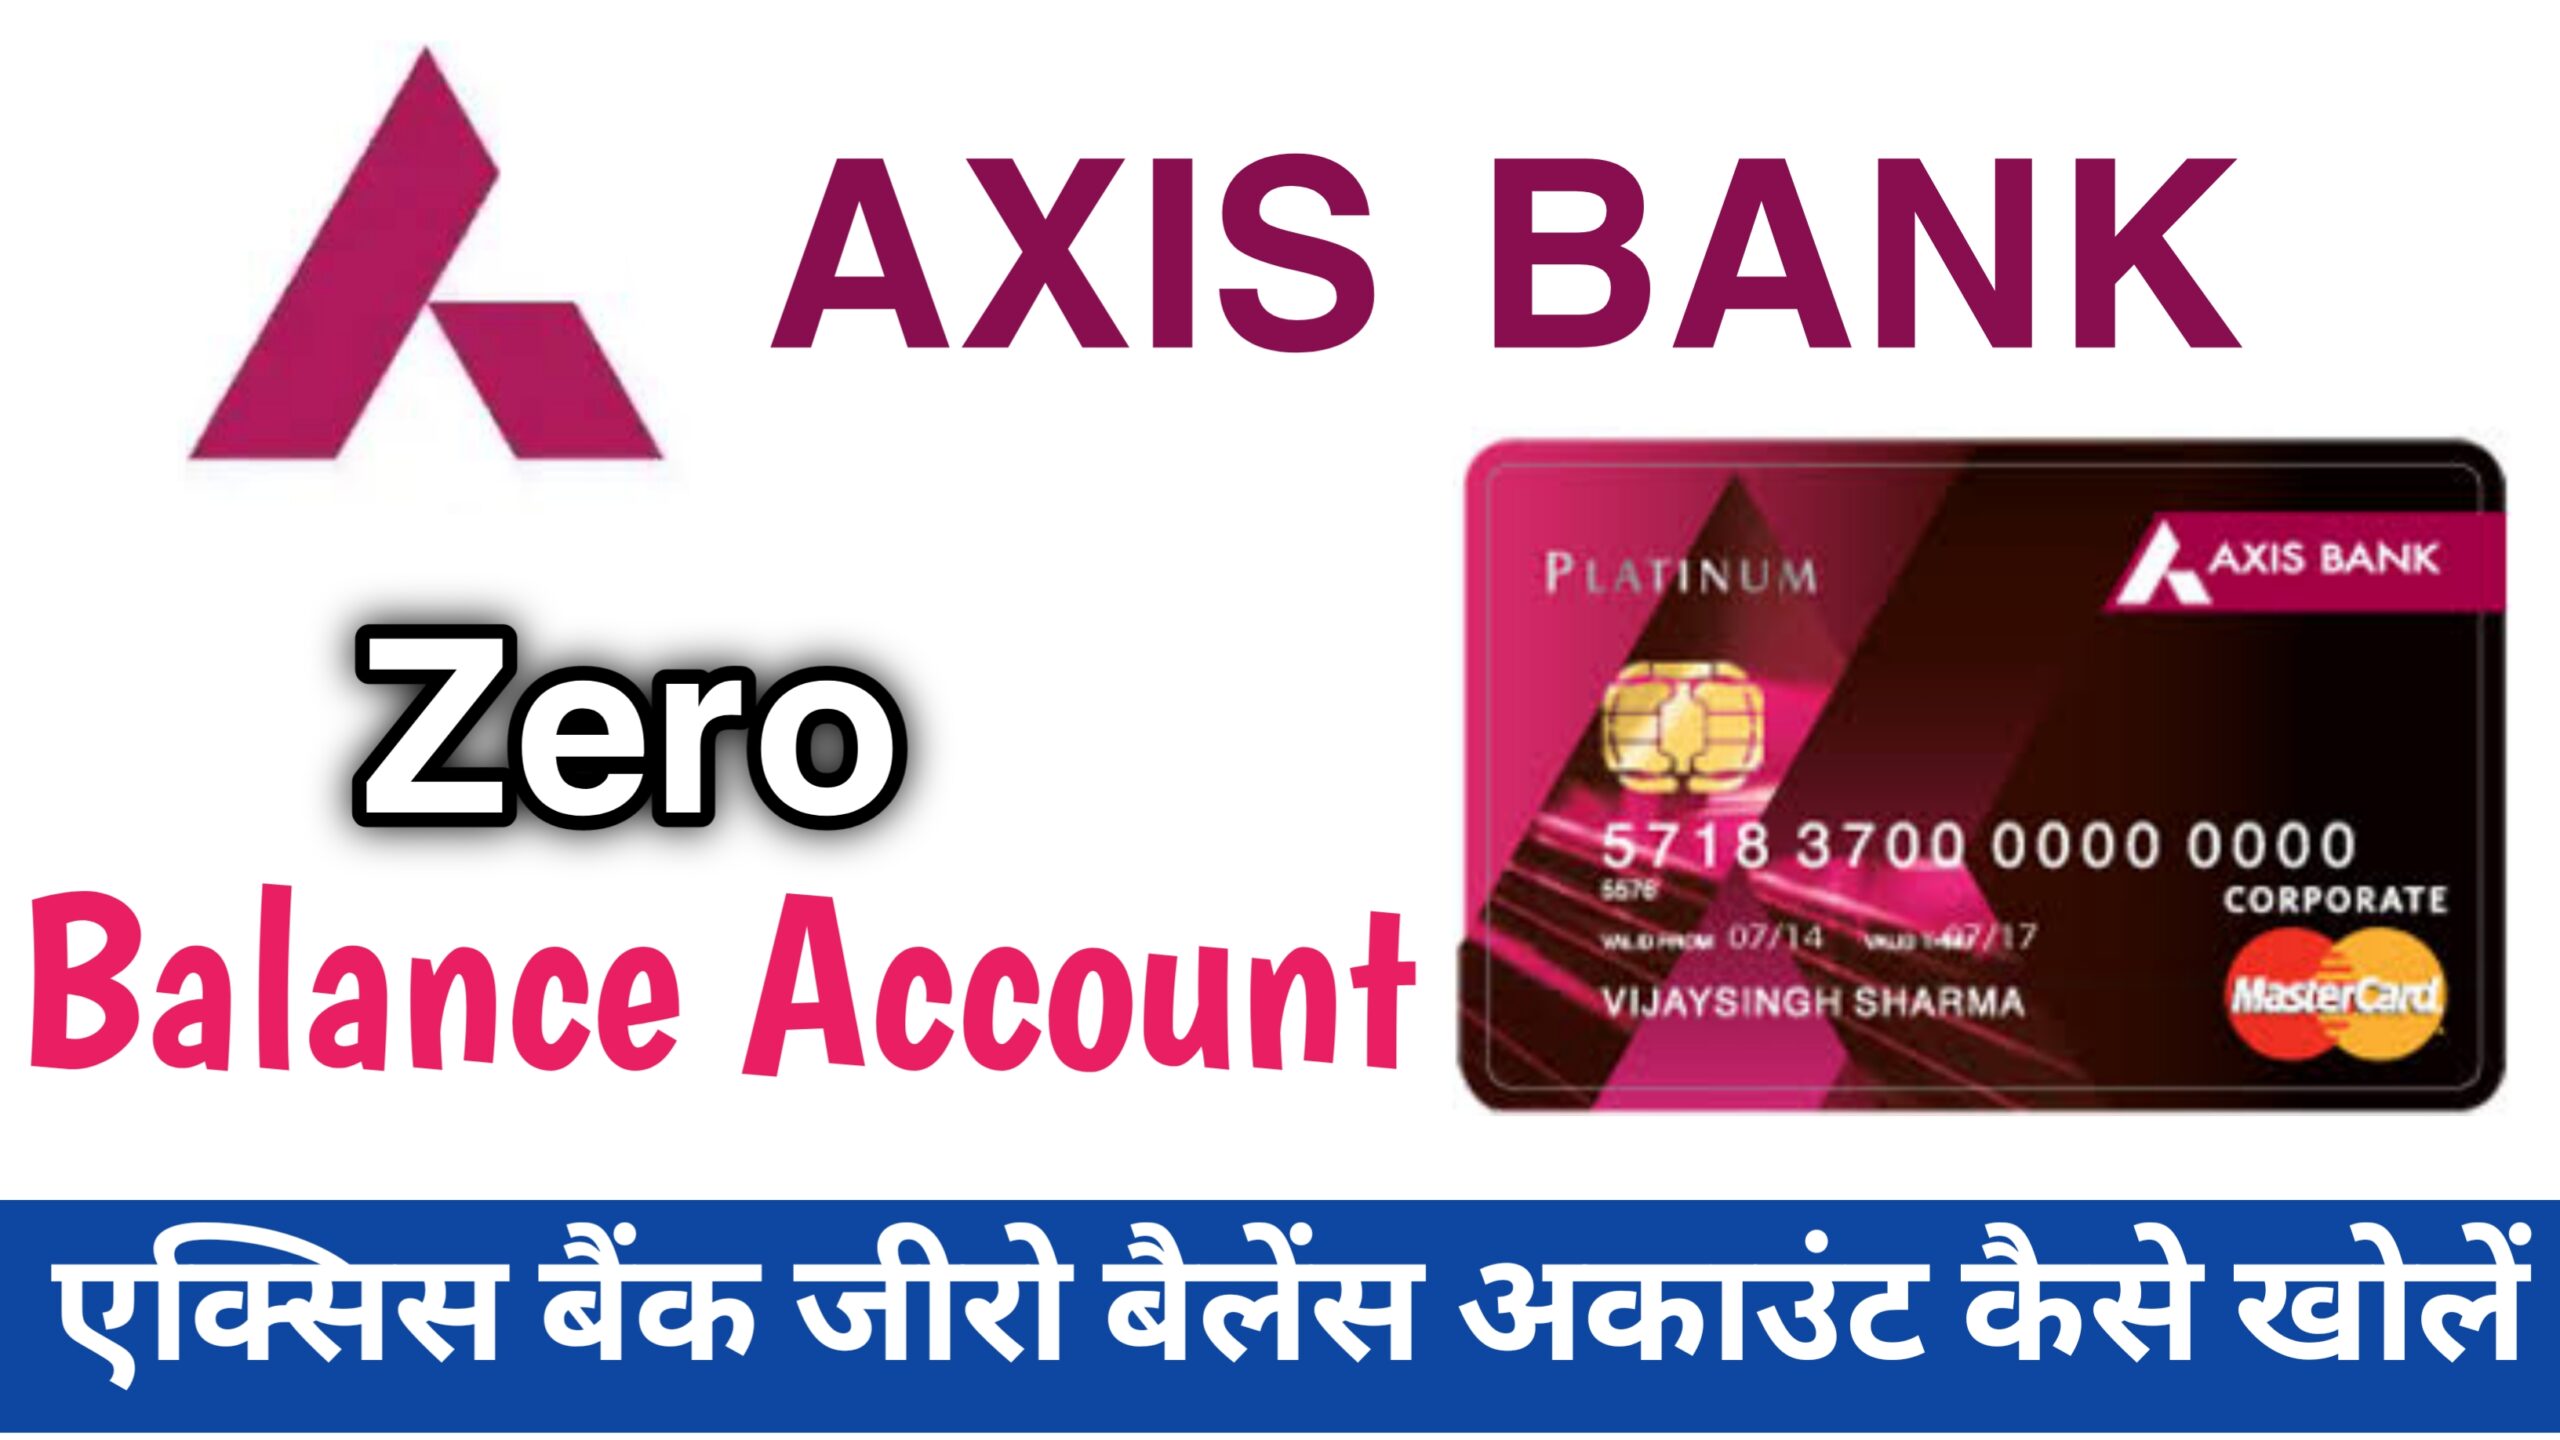 Axis Bank zero balance account